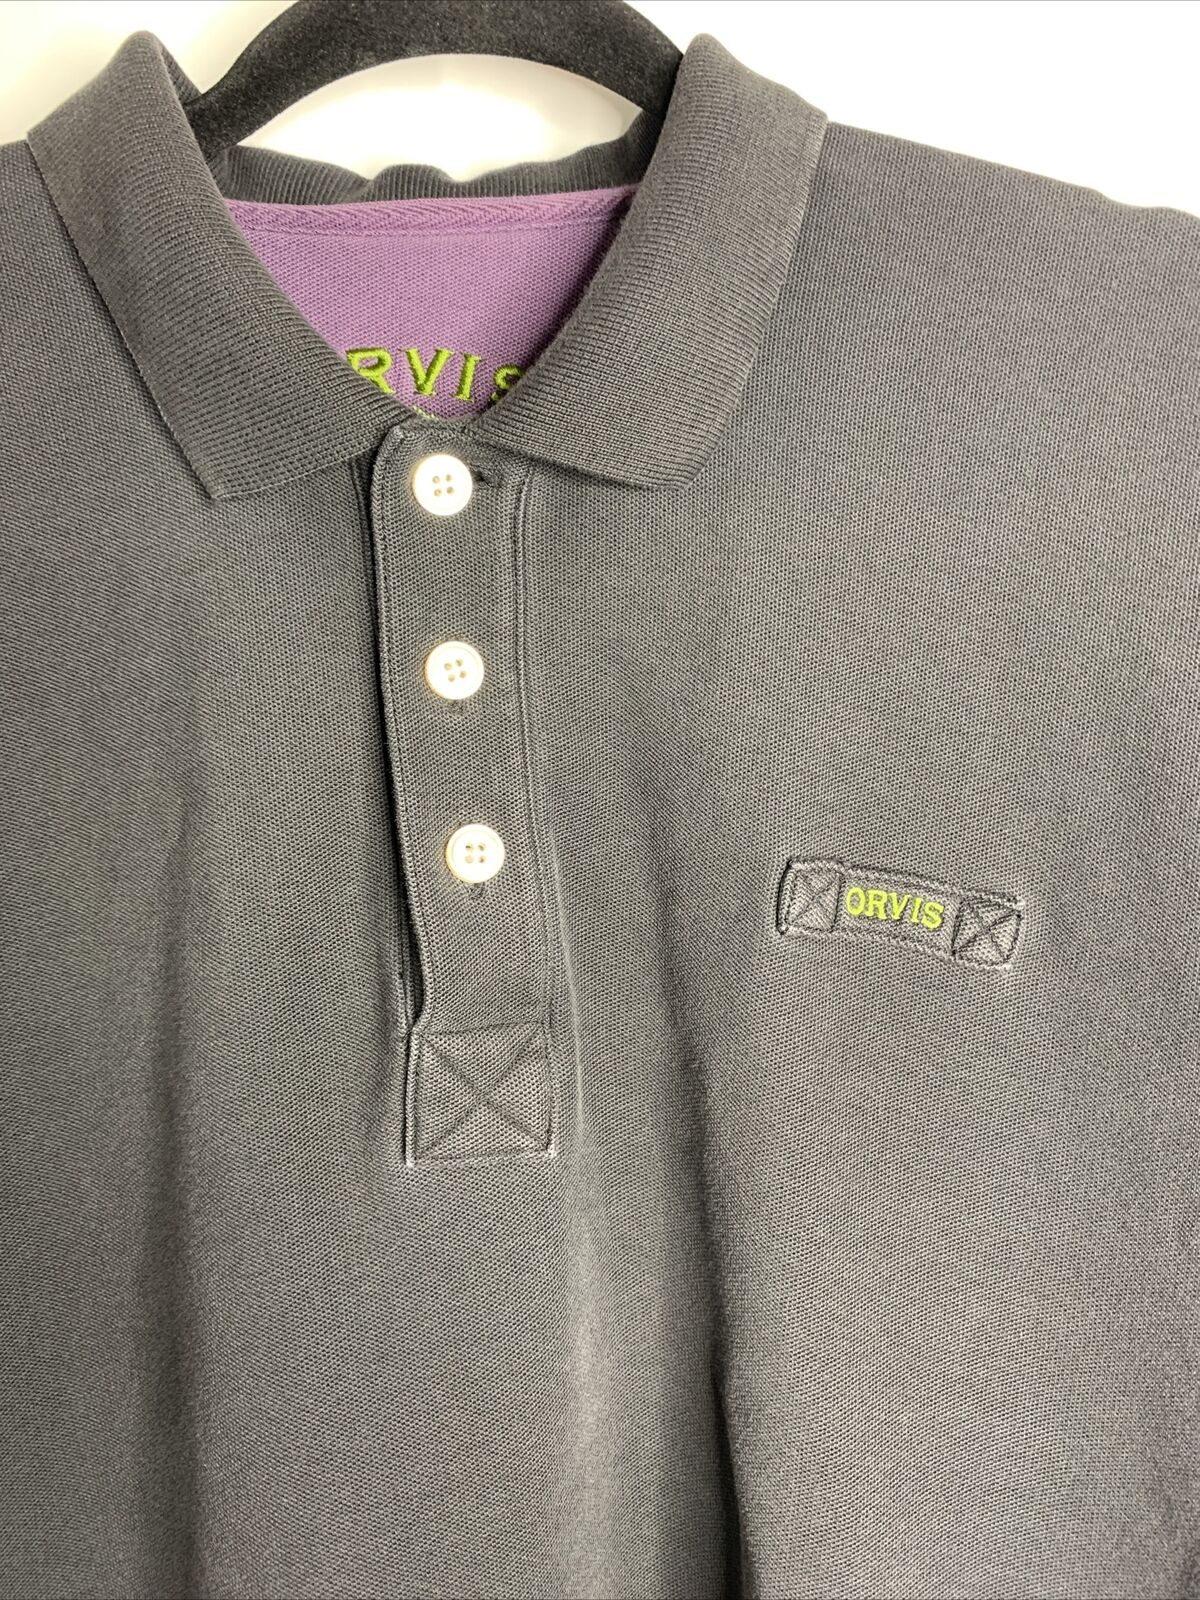 Orvis Men's Short Sleeve Polo Shirt Black Purple Size XLT Tall | eBay